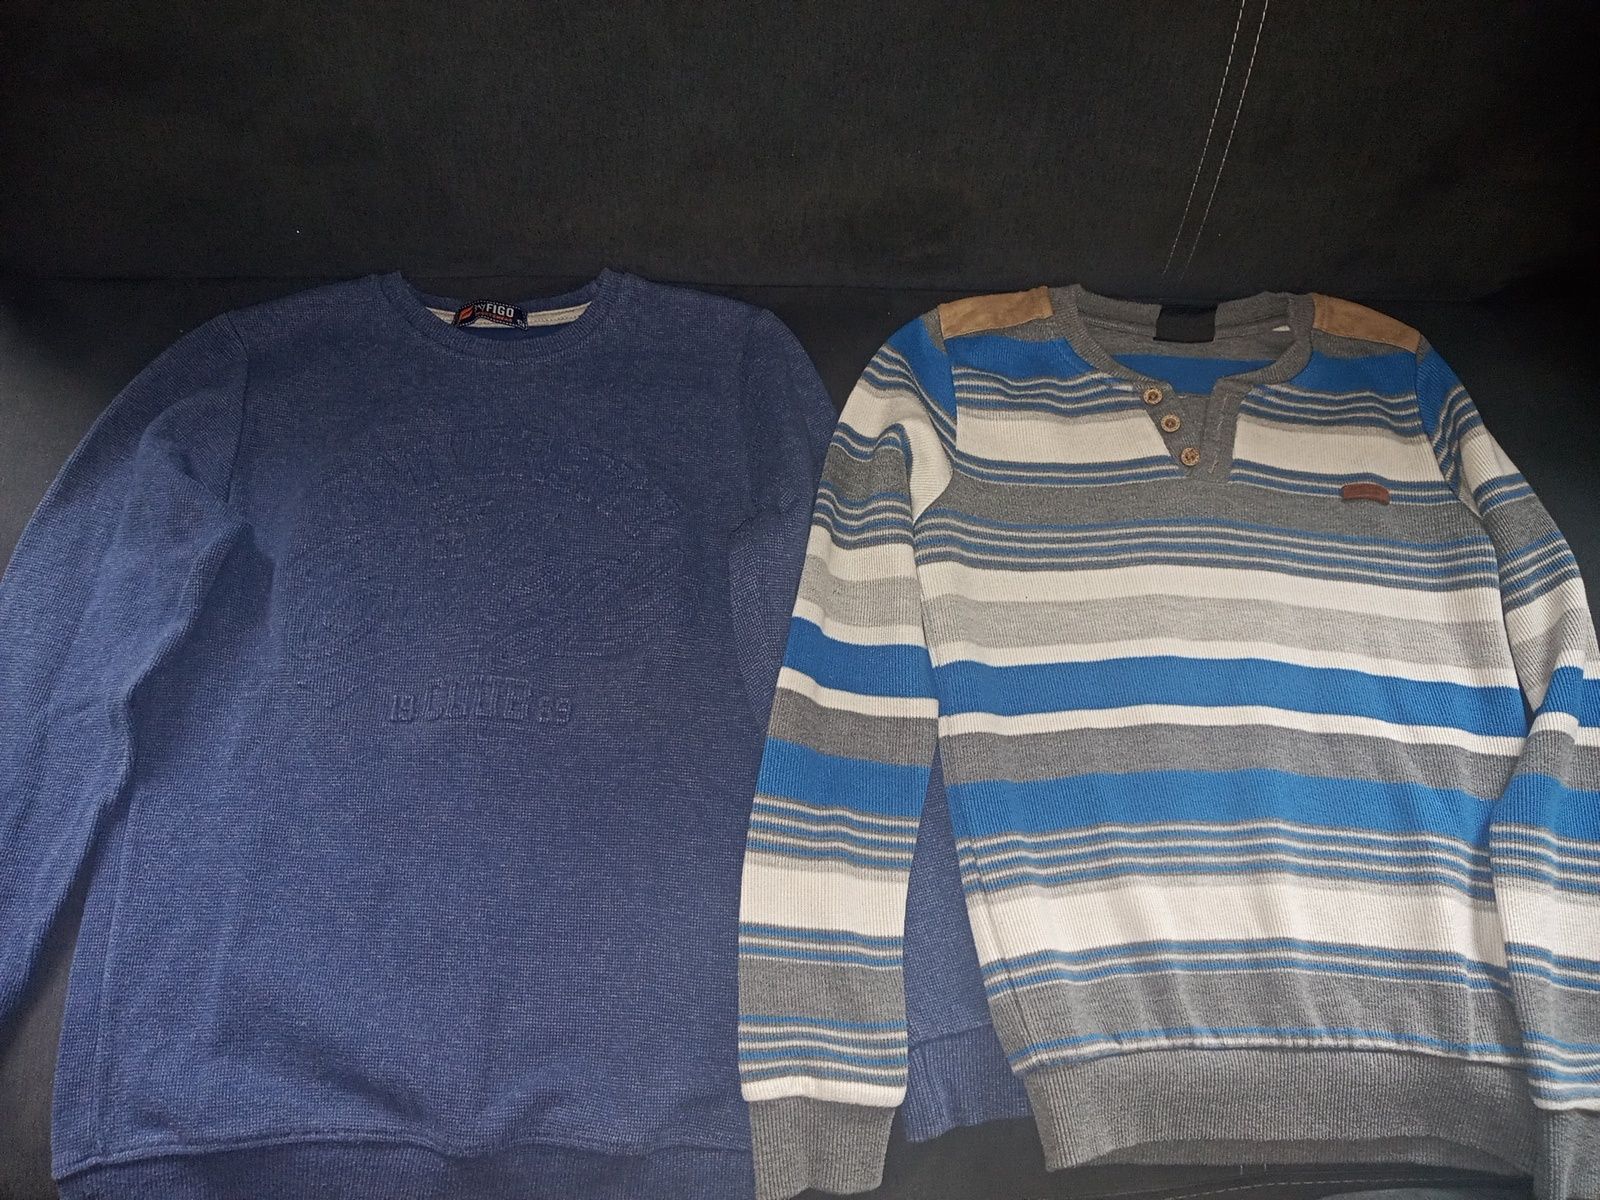 Bluza sweter zestaw 6 szt.  Roz. 128 - 134 ( 8 - 9 lat )